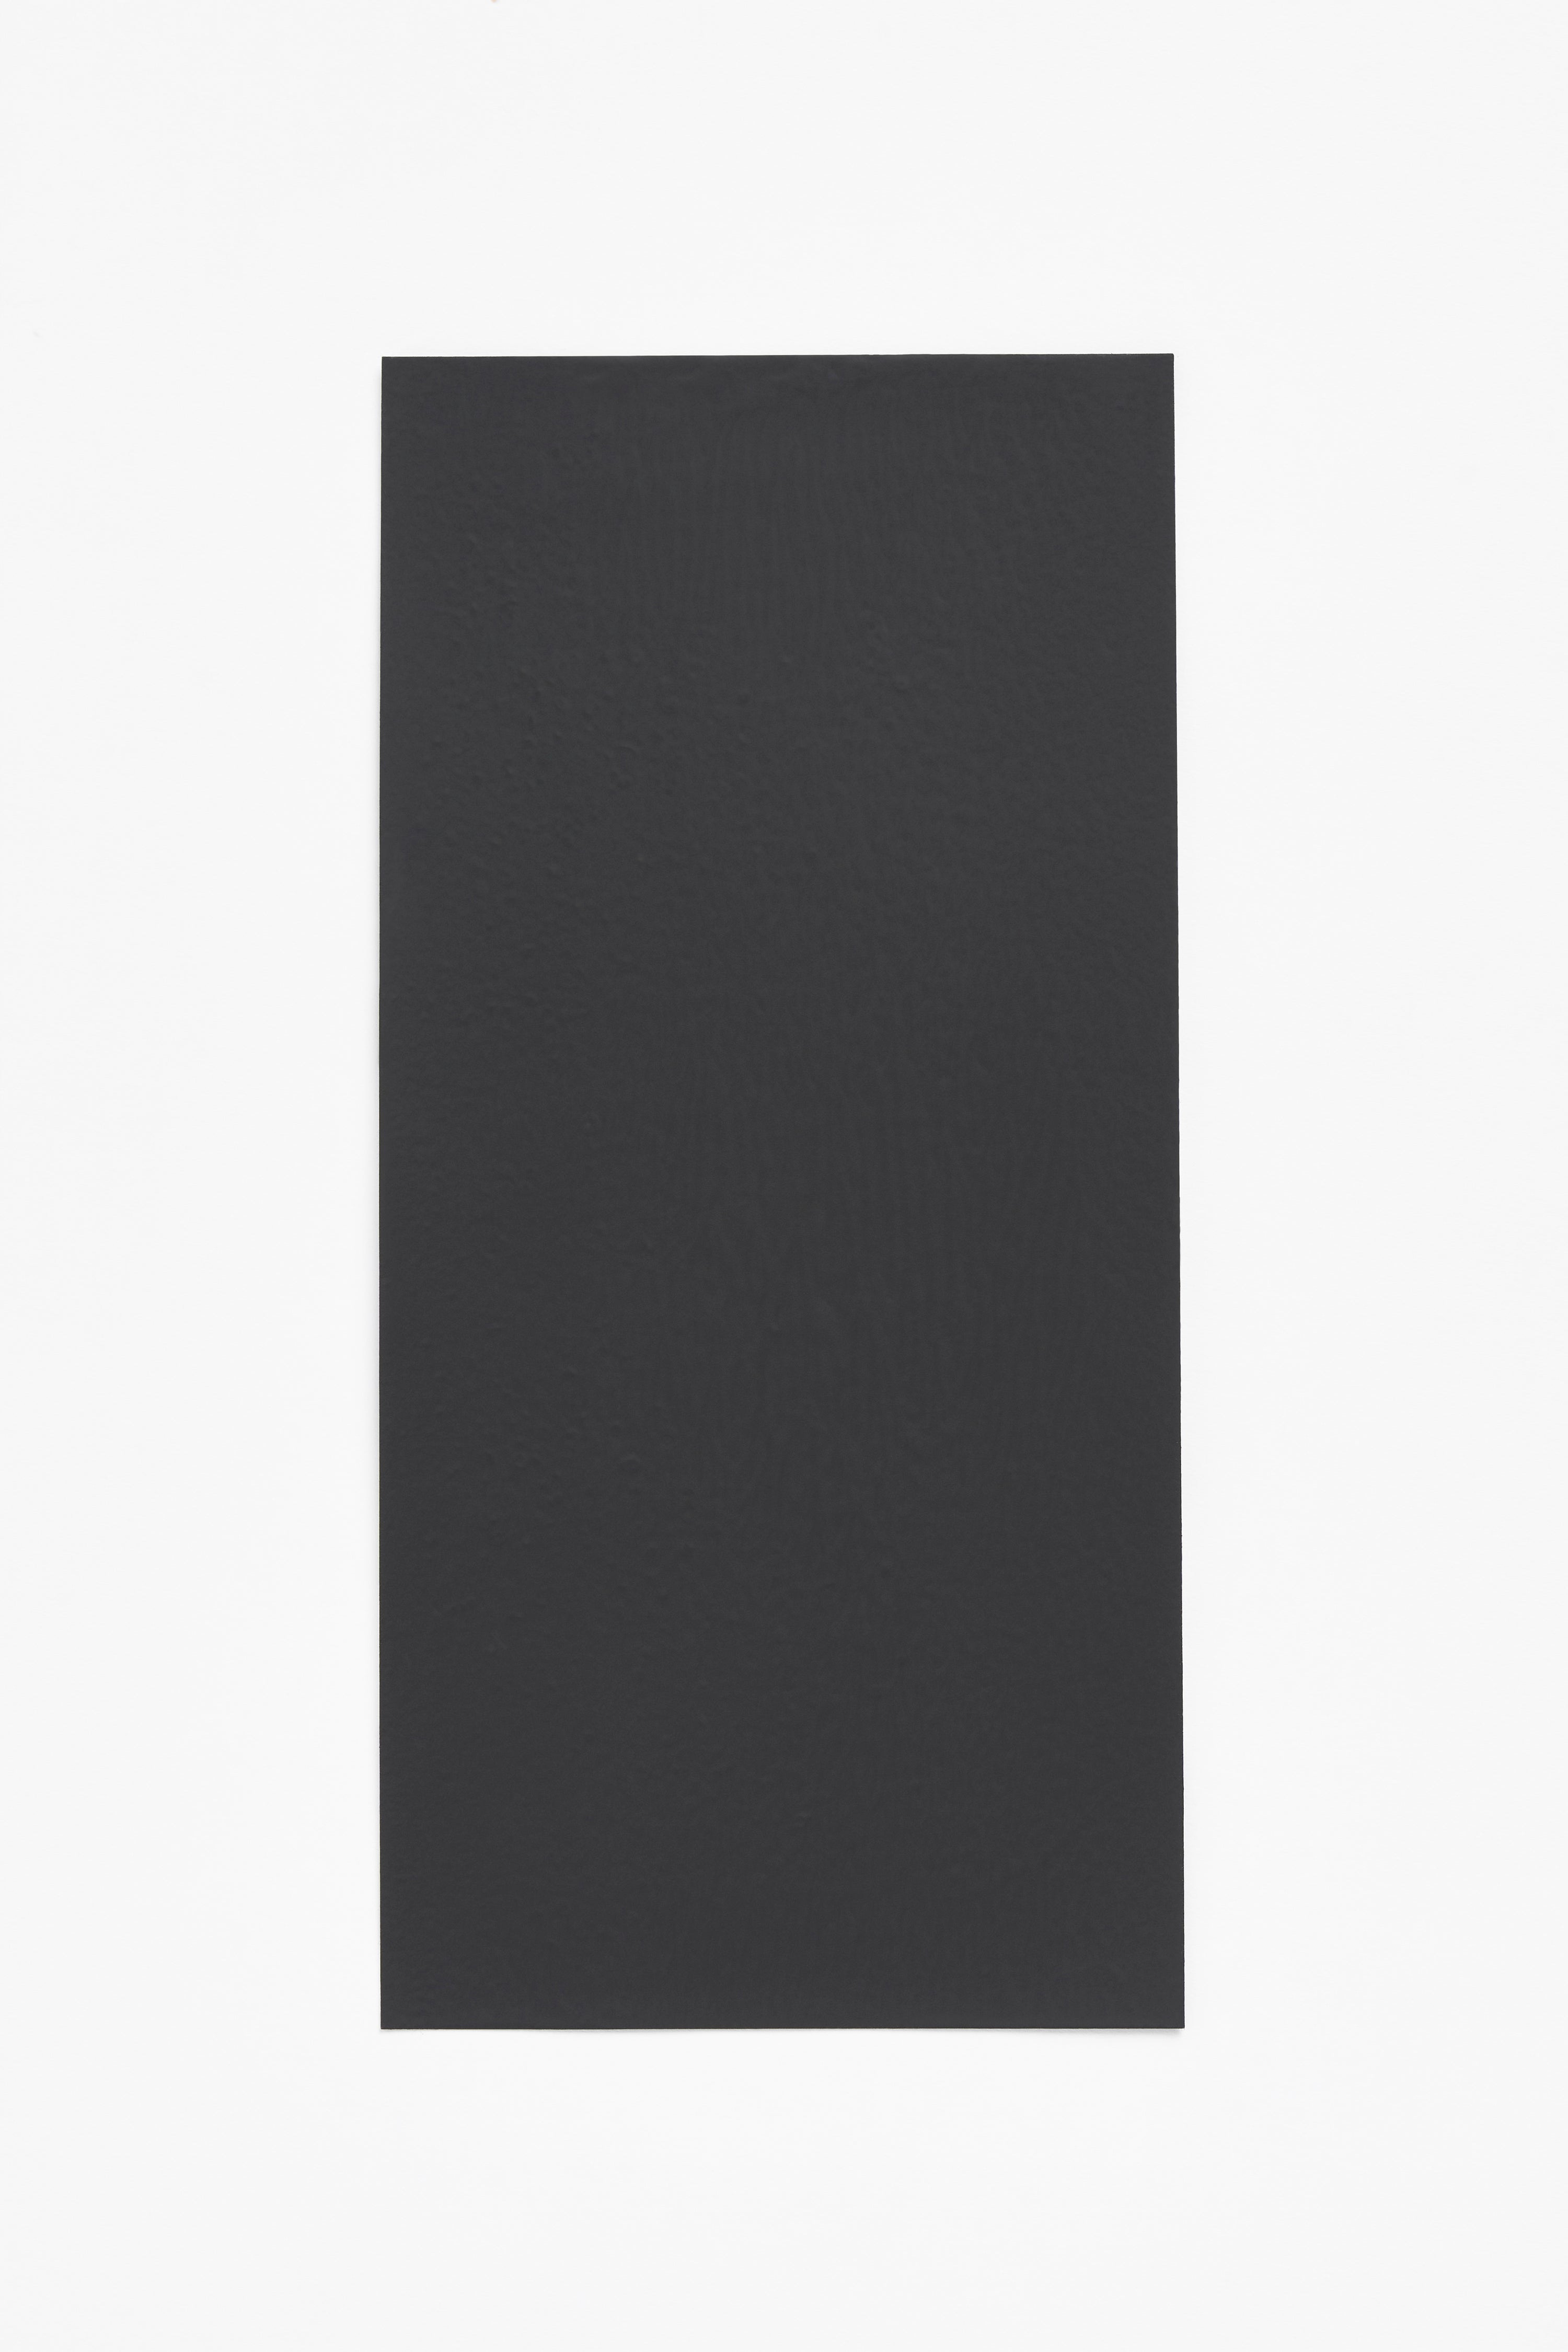 Vintage Black — a paint colour developed by Halleroed for Blēo